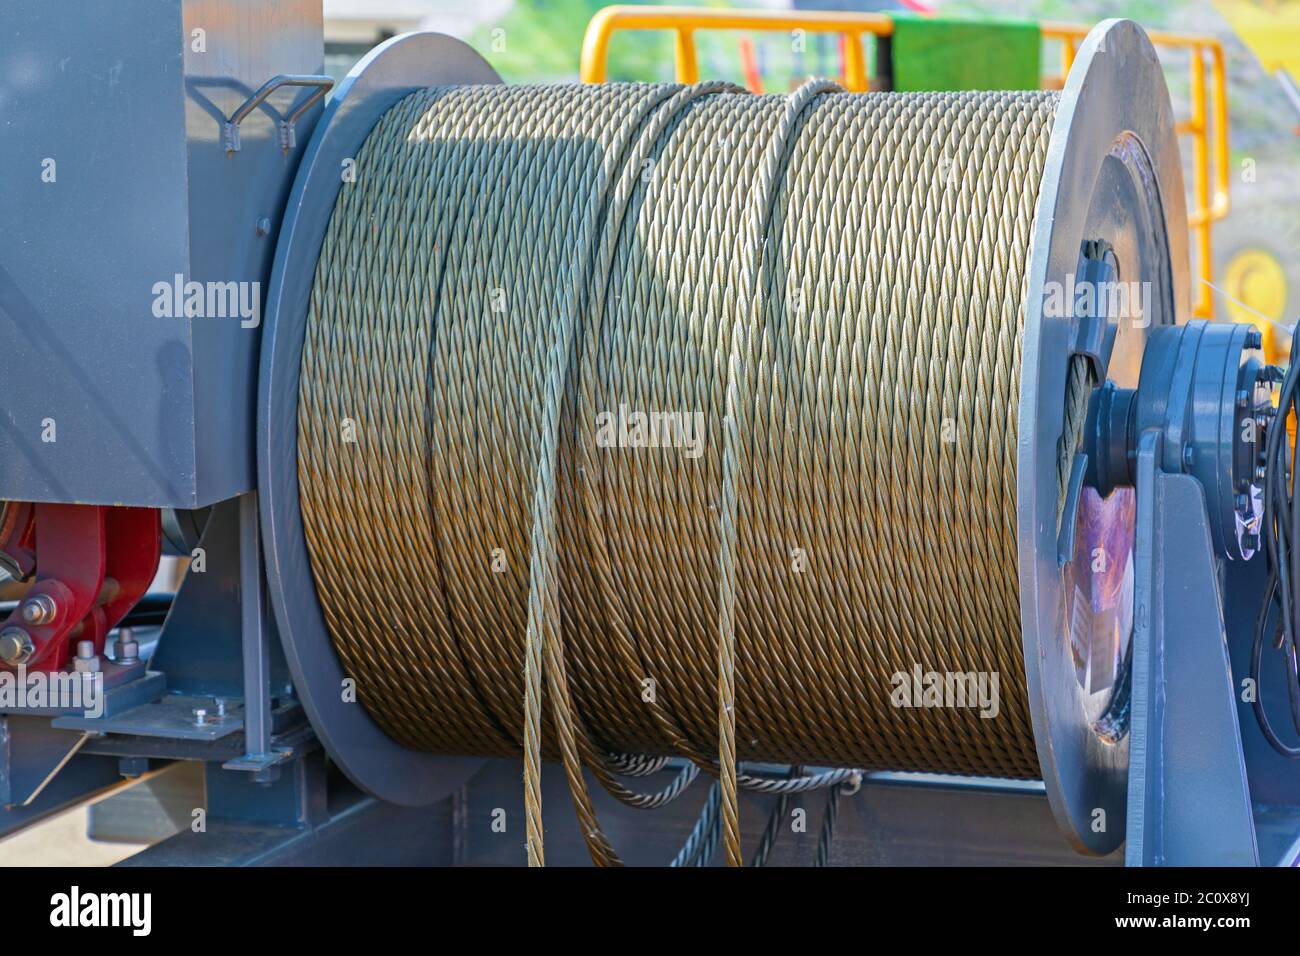 https://c8.alamy.com/comp/2C0X8YJ/cable-wire-reel-spool-at-construction-crane-2C0X8YJ.jpg